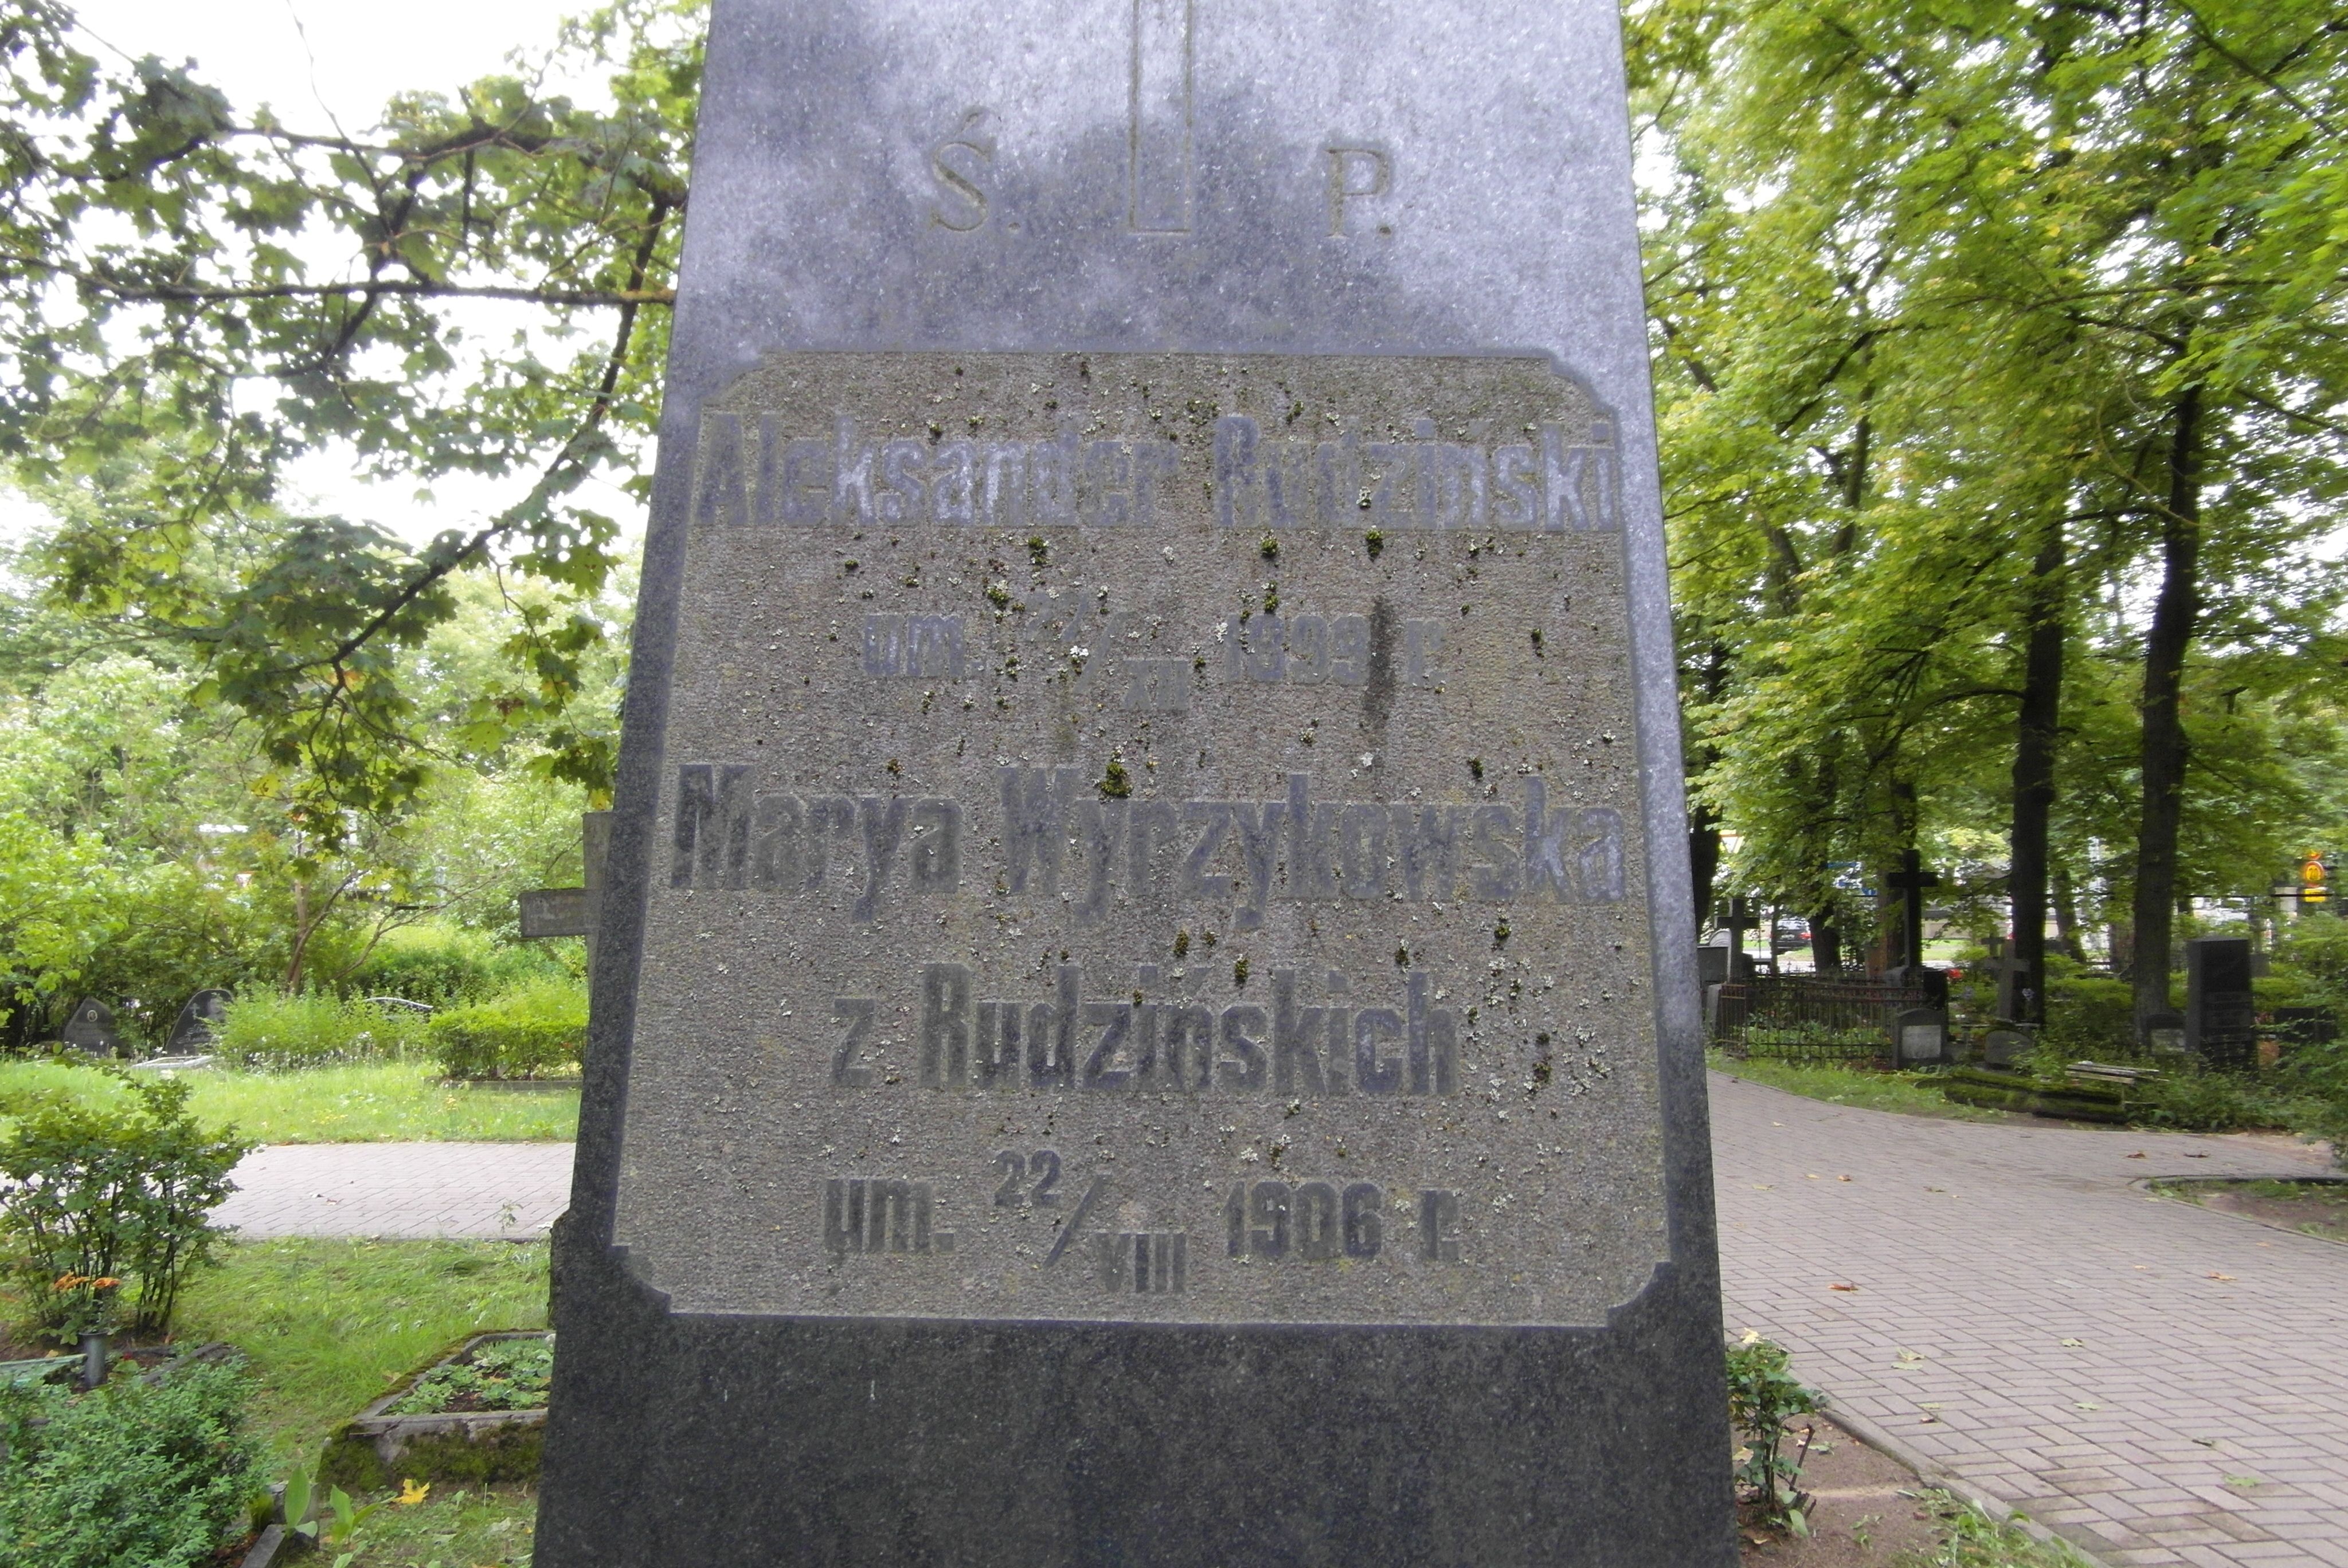 Inscription from the tombstone of Alexander Rudzinski, Marya Wyrzykowska, St Michael's cemetery in Riga, as of 2021.